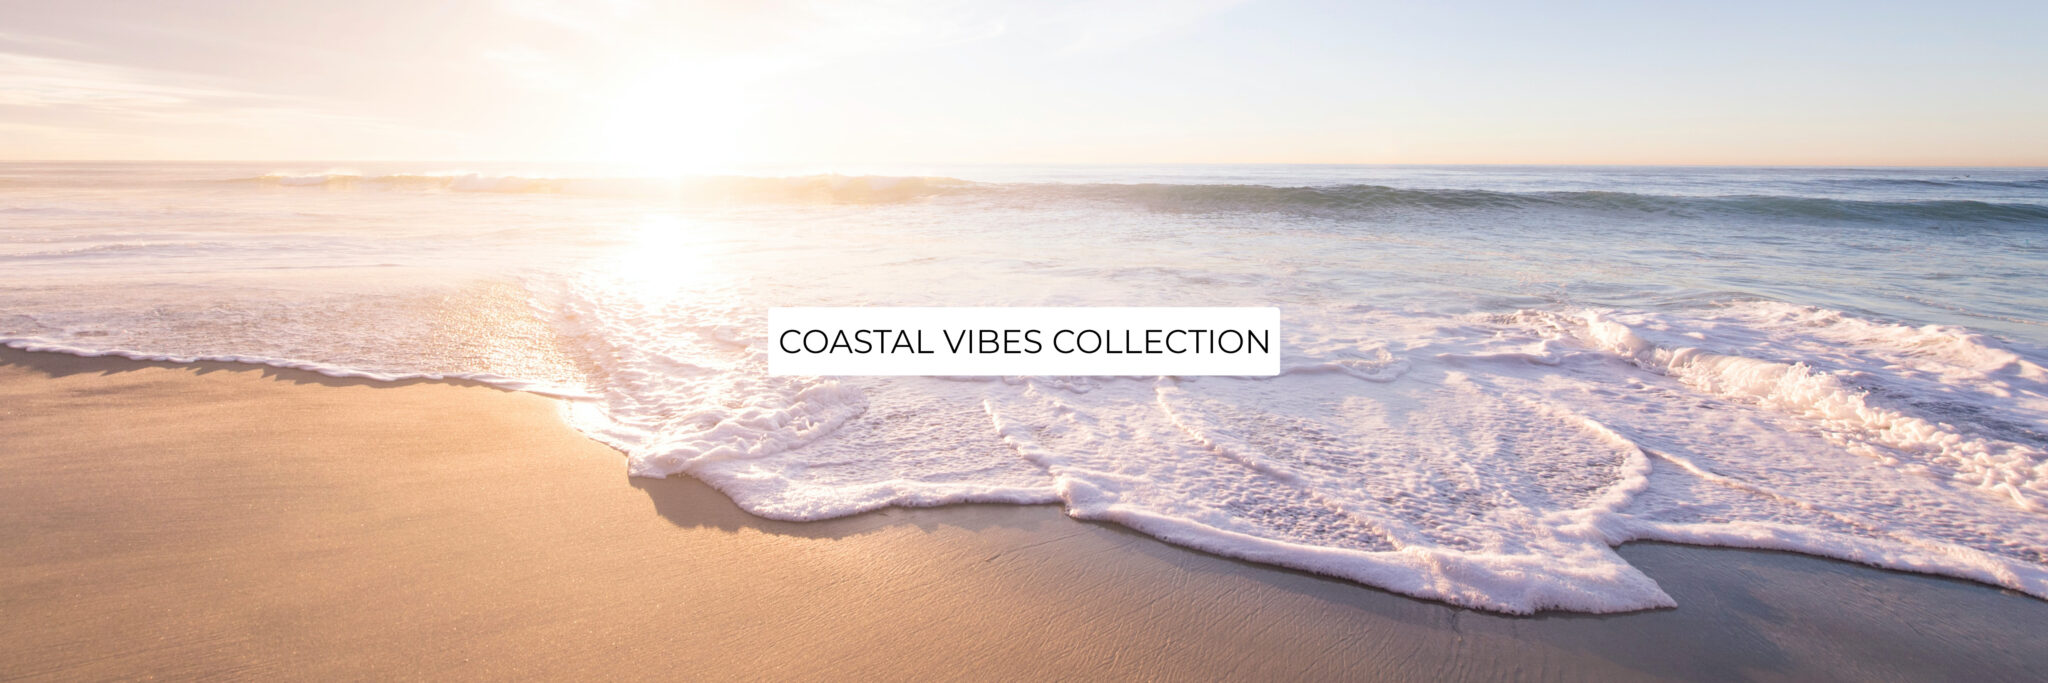 Coastal Vibes Cover